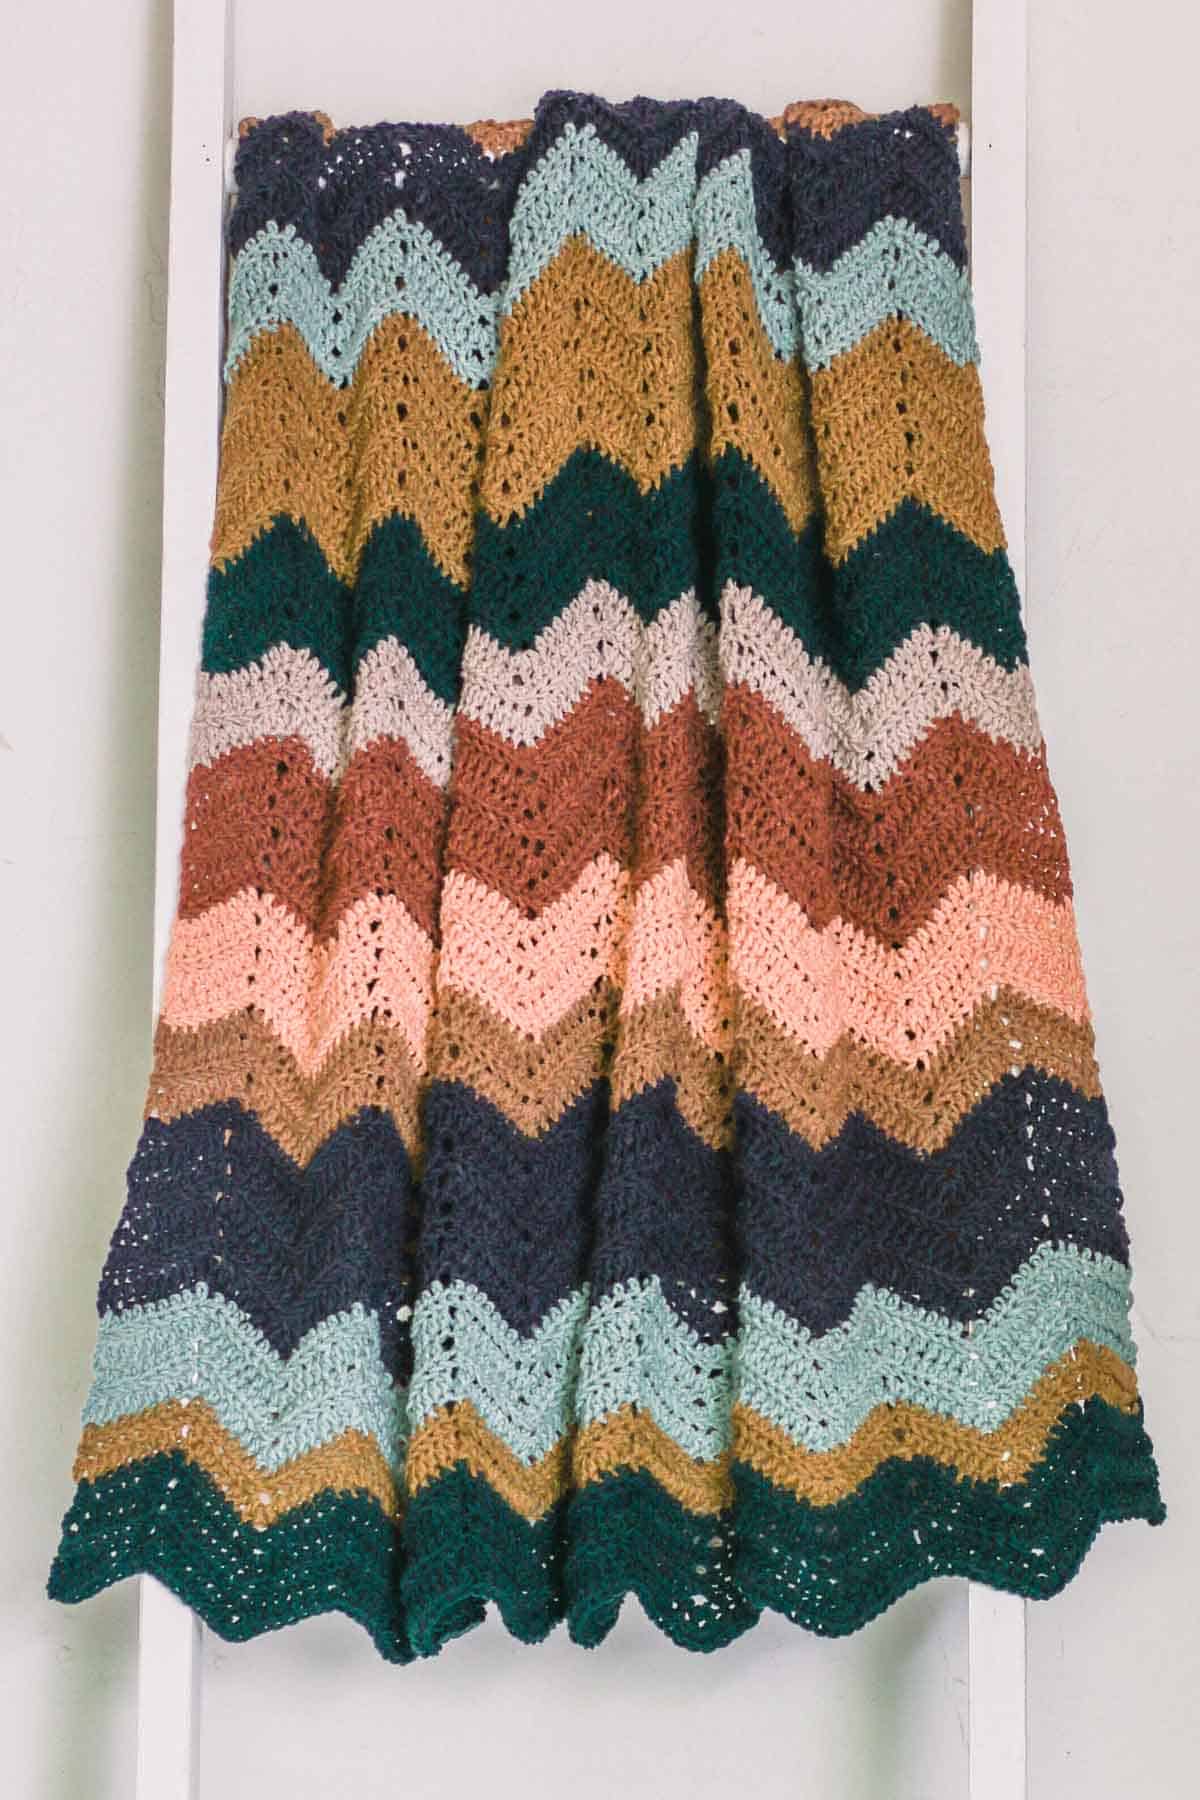 A multi-color crochet zig zag blanket draped over a ladder.